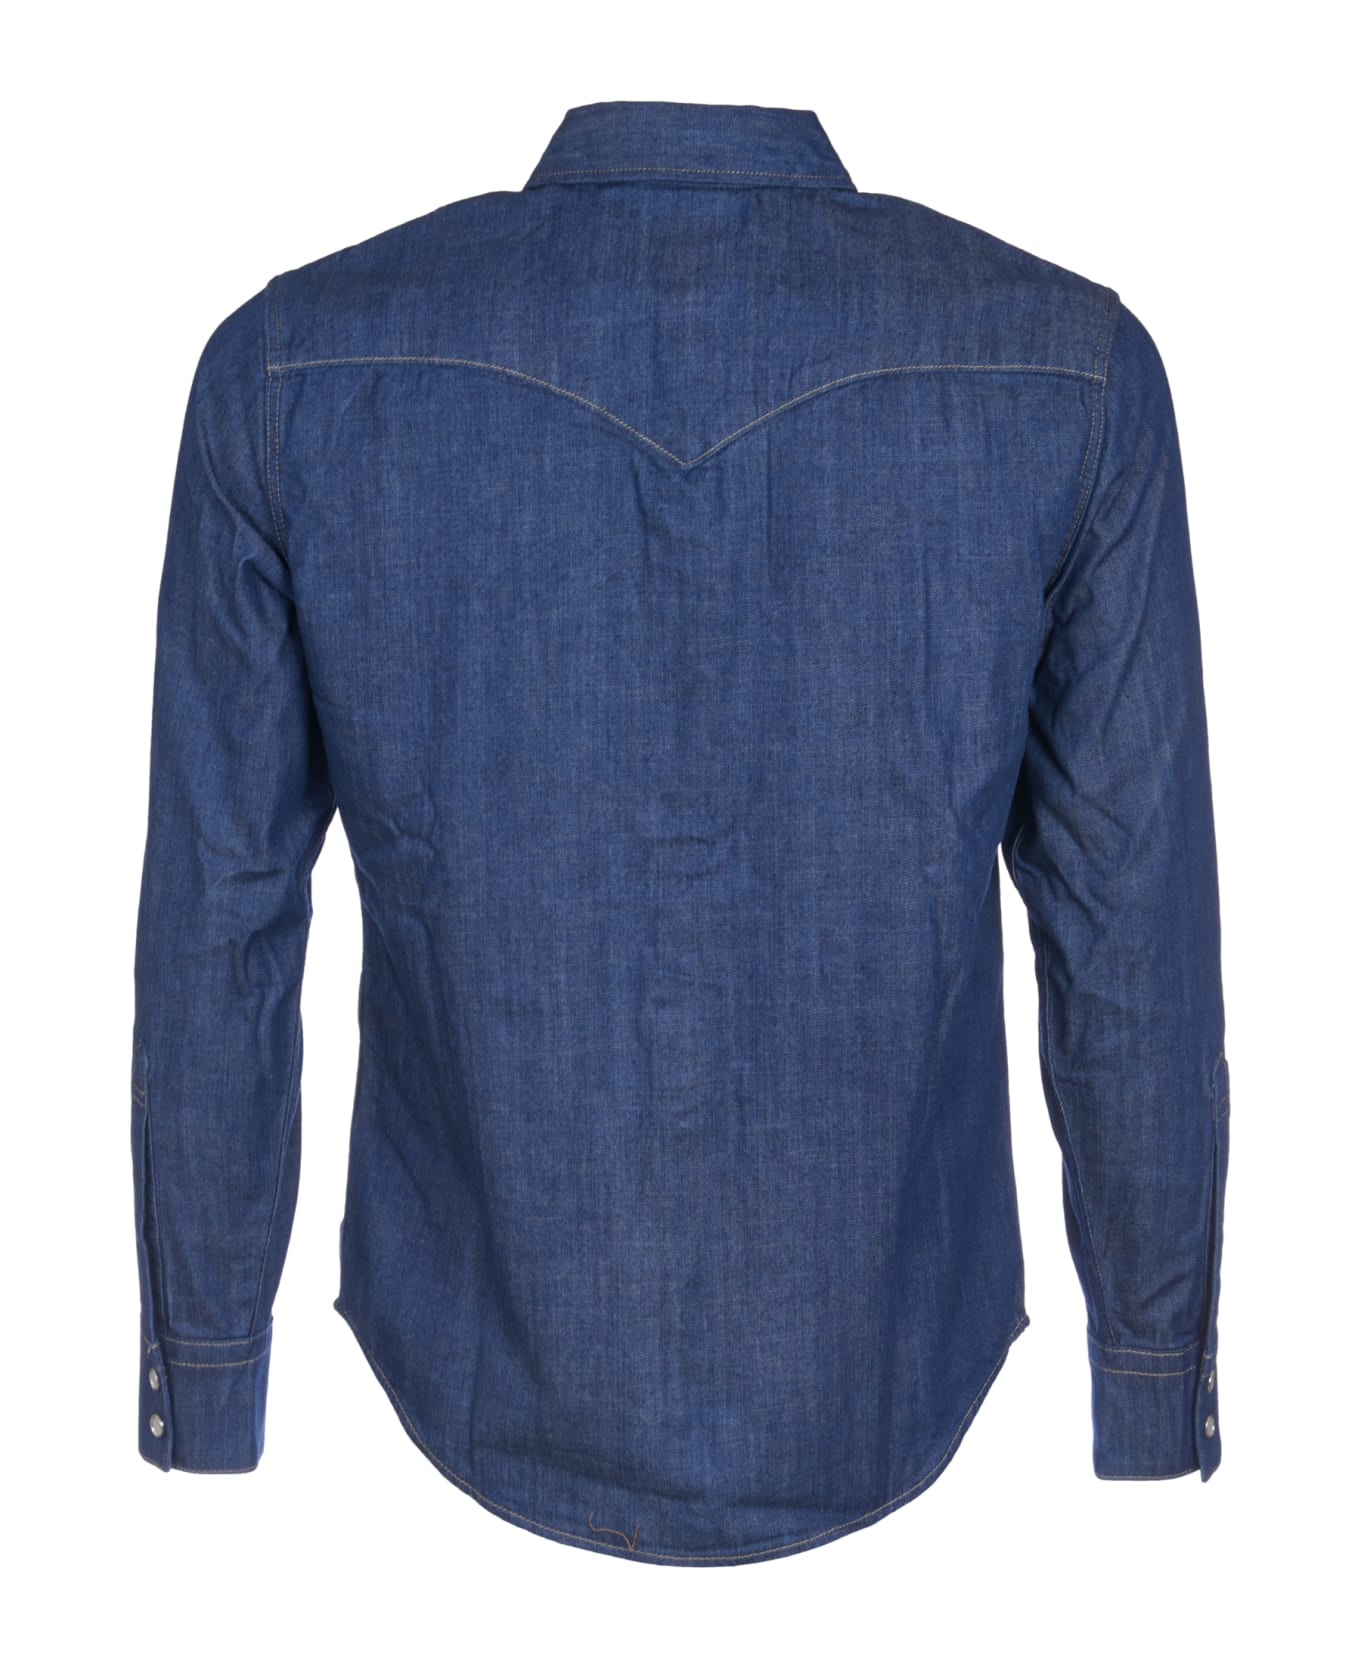 Levi's Barston Shirt - Blue